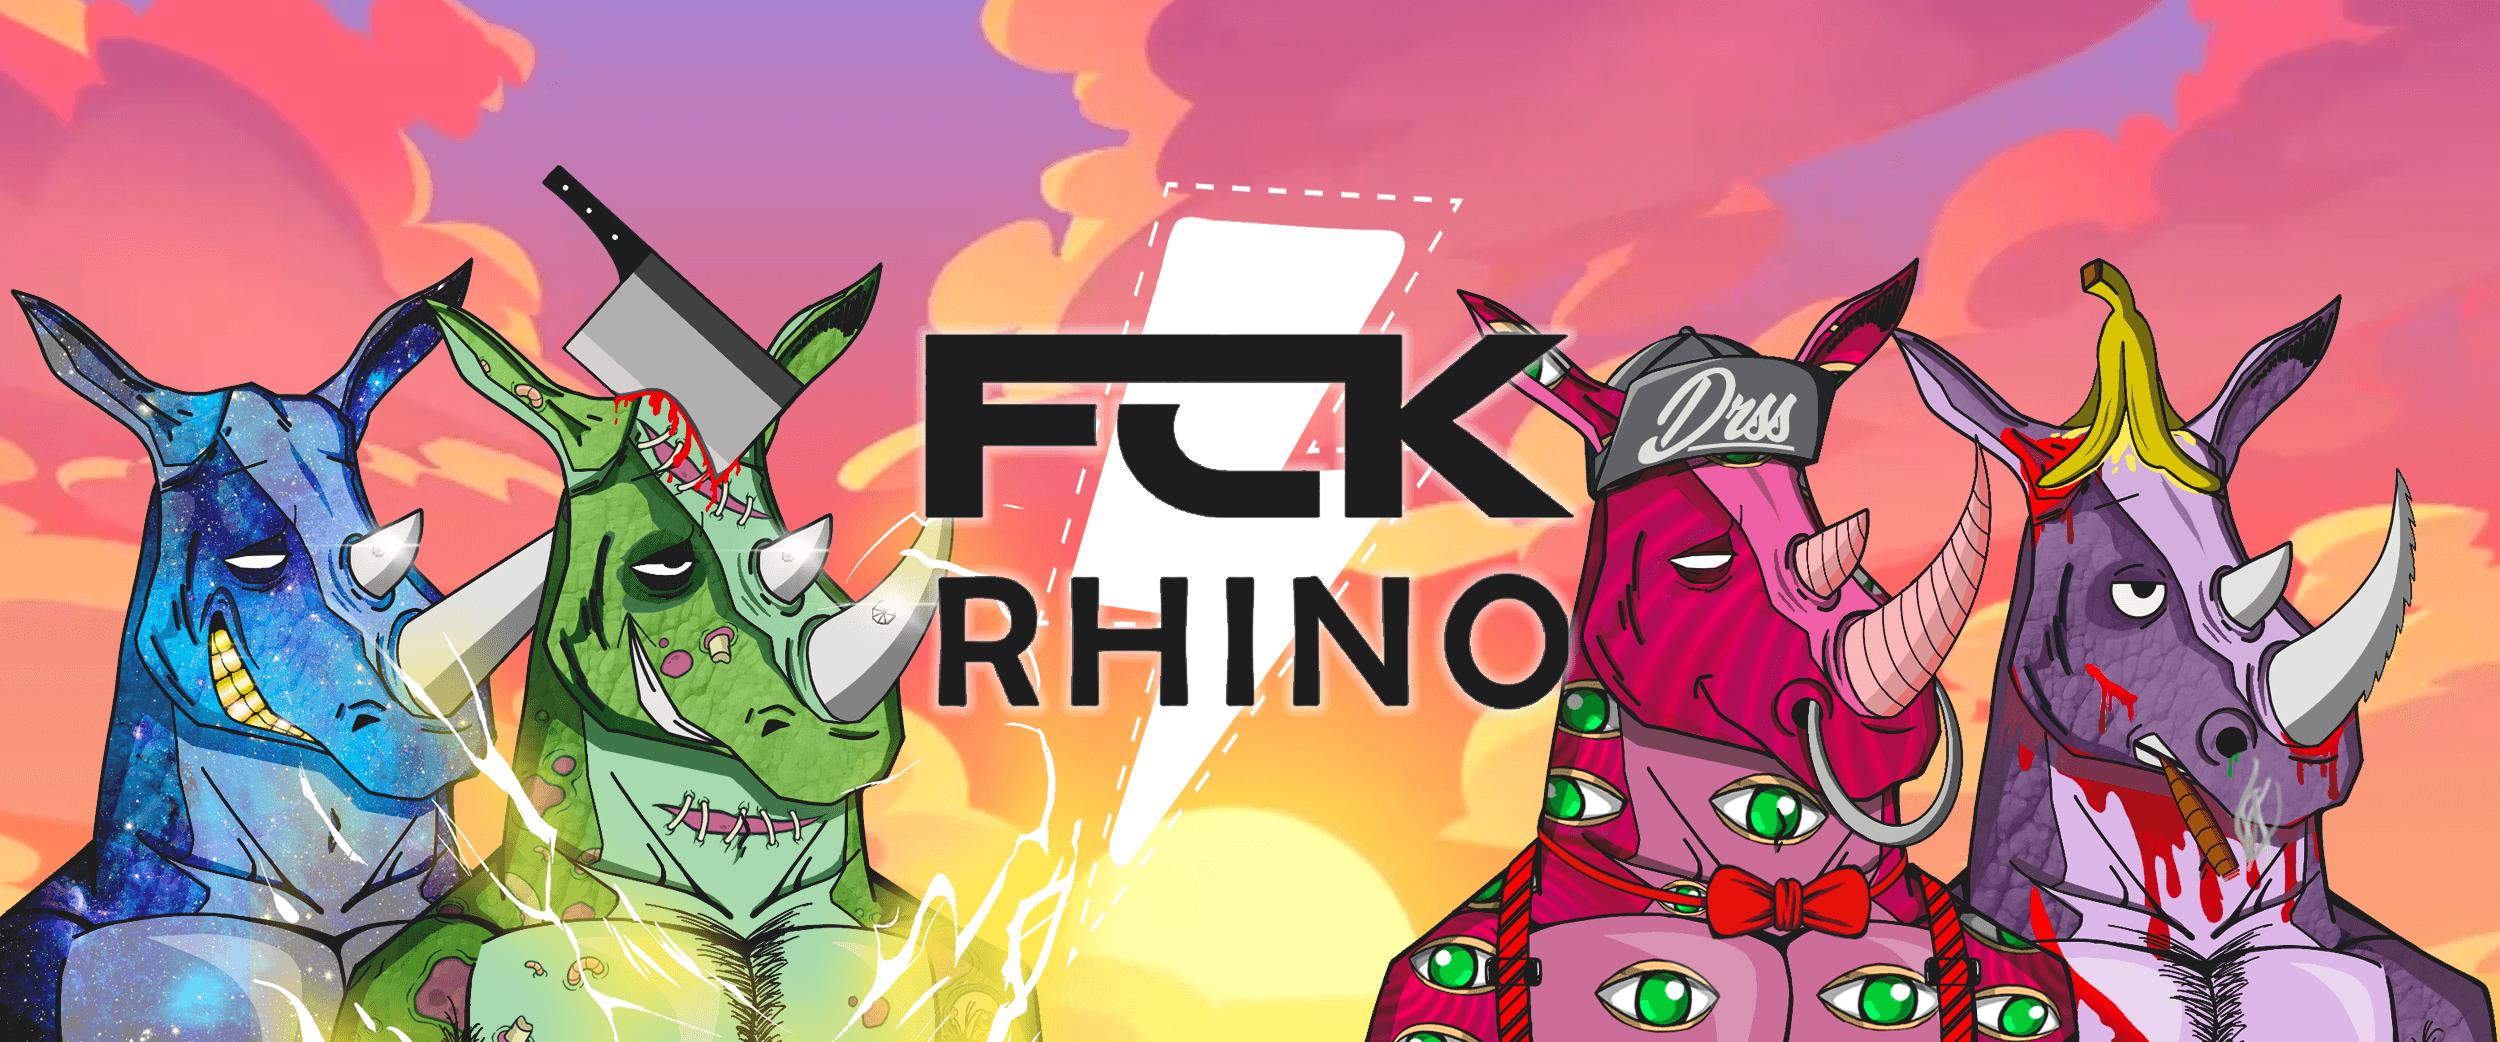 FCK_RHINO banner